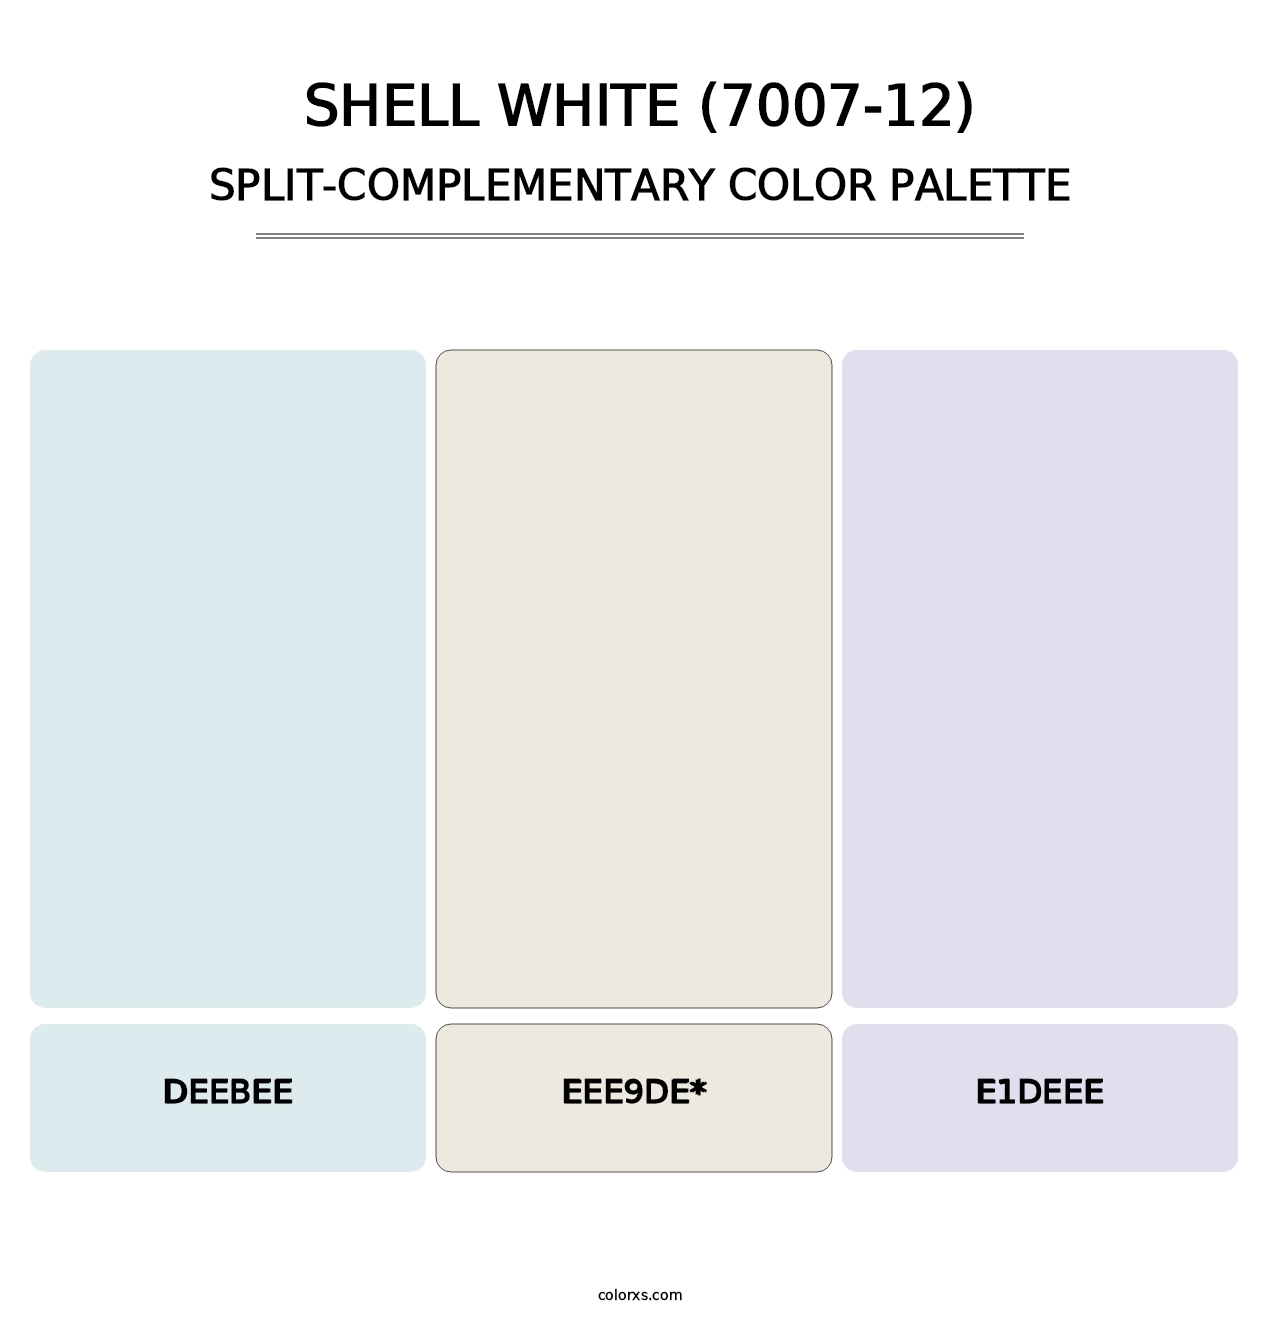 Shell White (7007-12) - Split-Complementary Color Palette